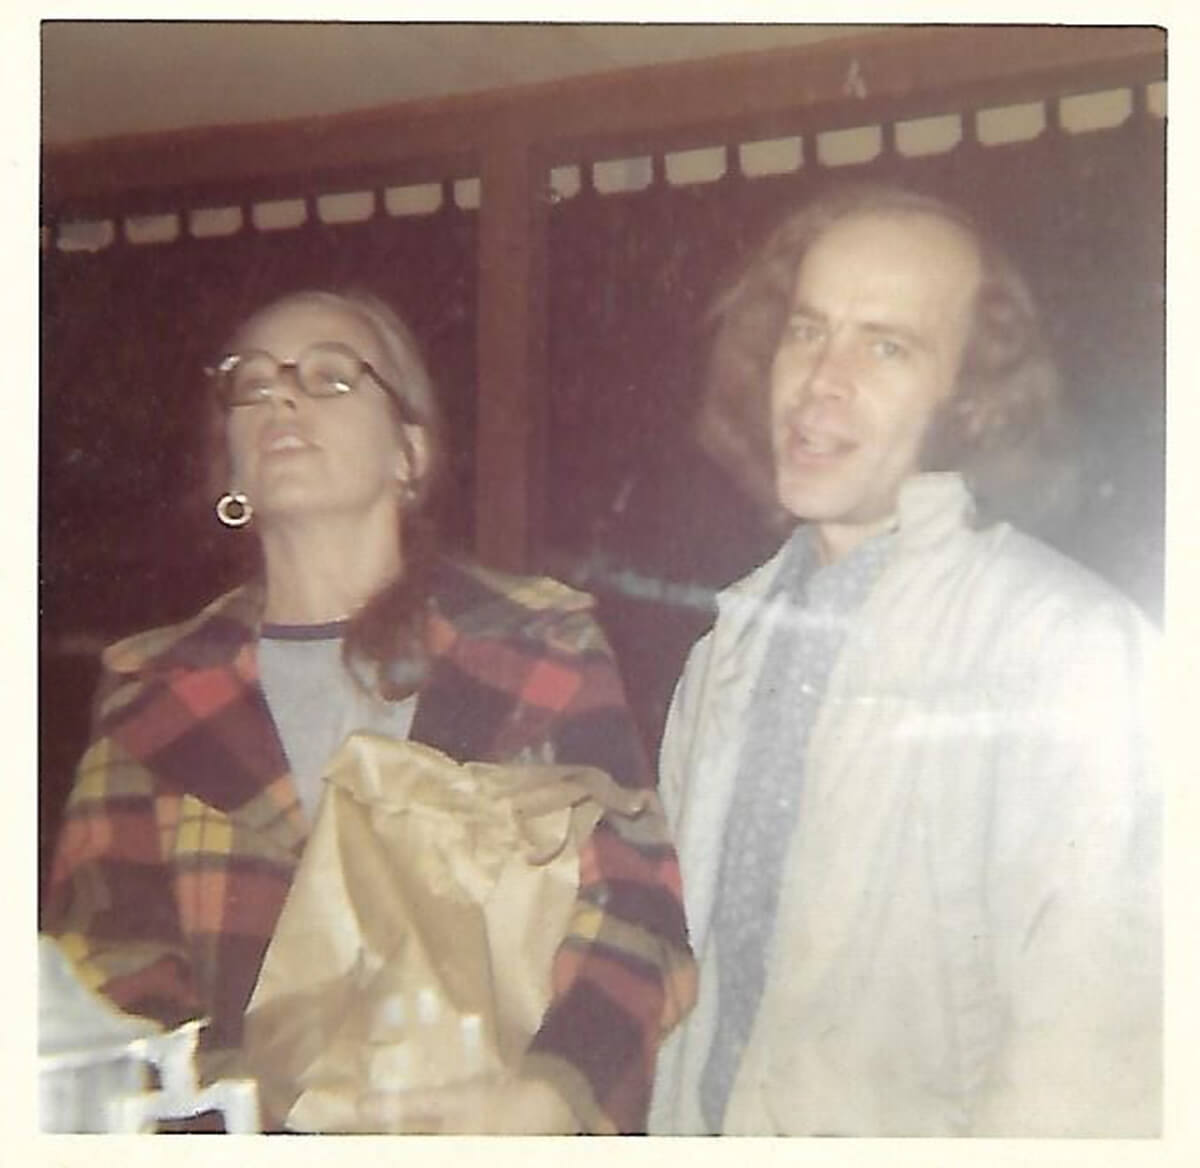 The author's father, circa 1973.